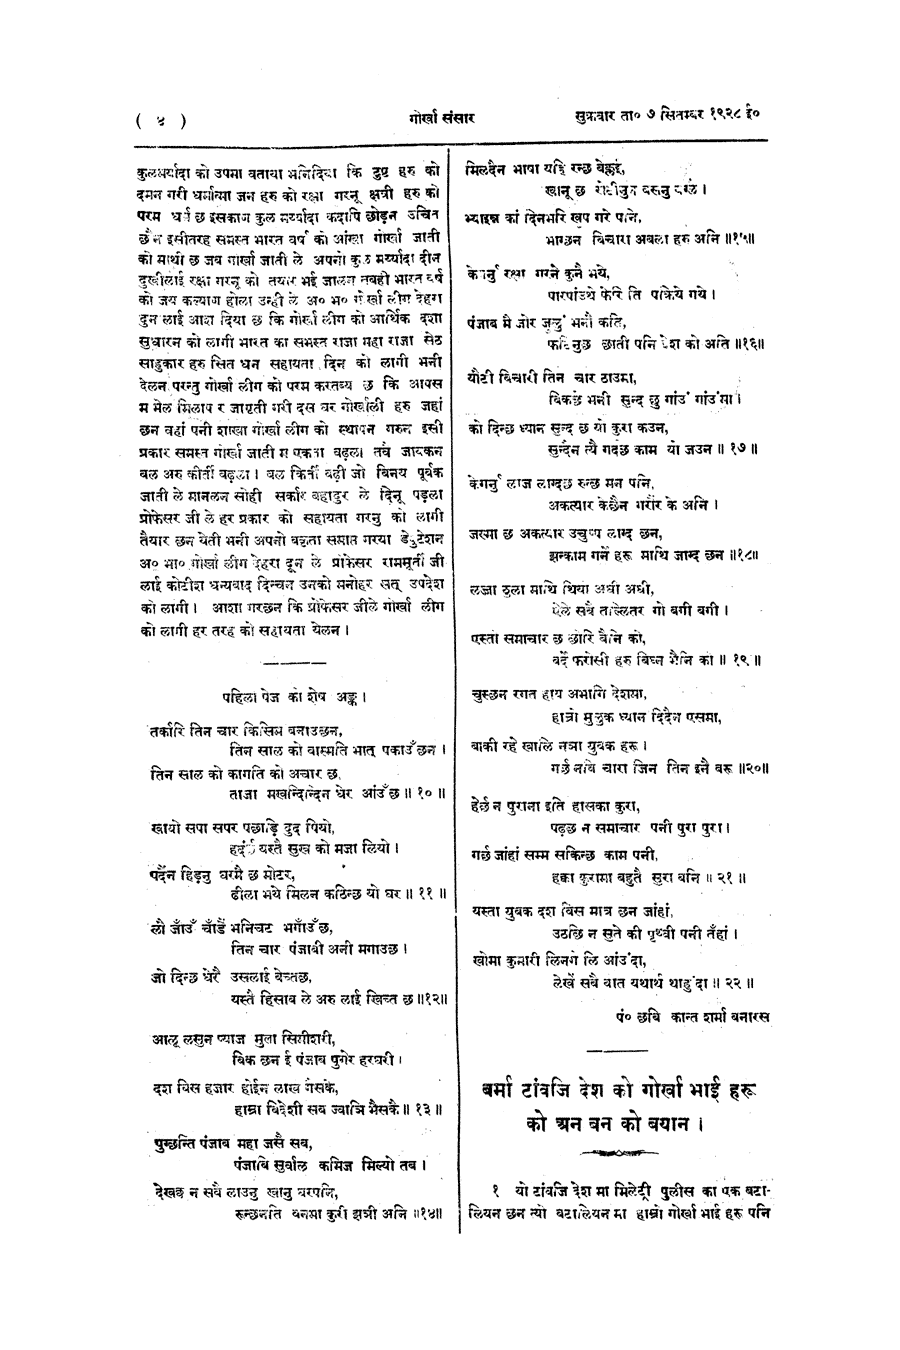 Gorkha Sansar, 7 Sept 1928, page 5